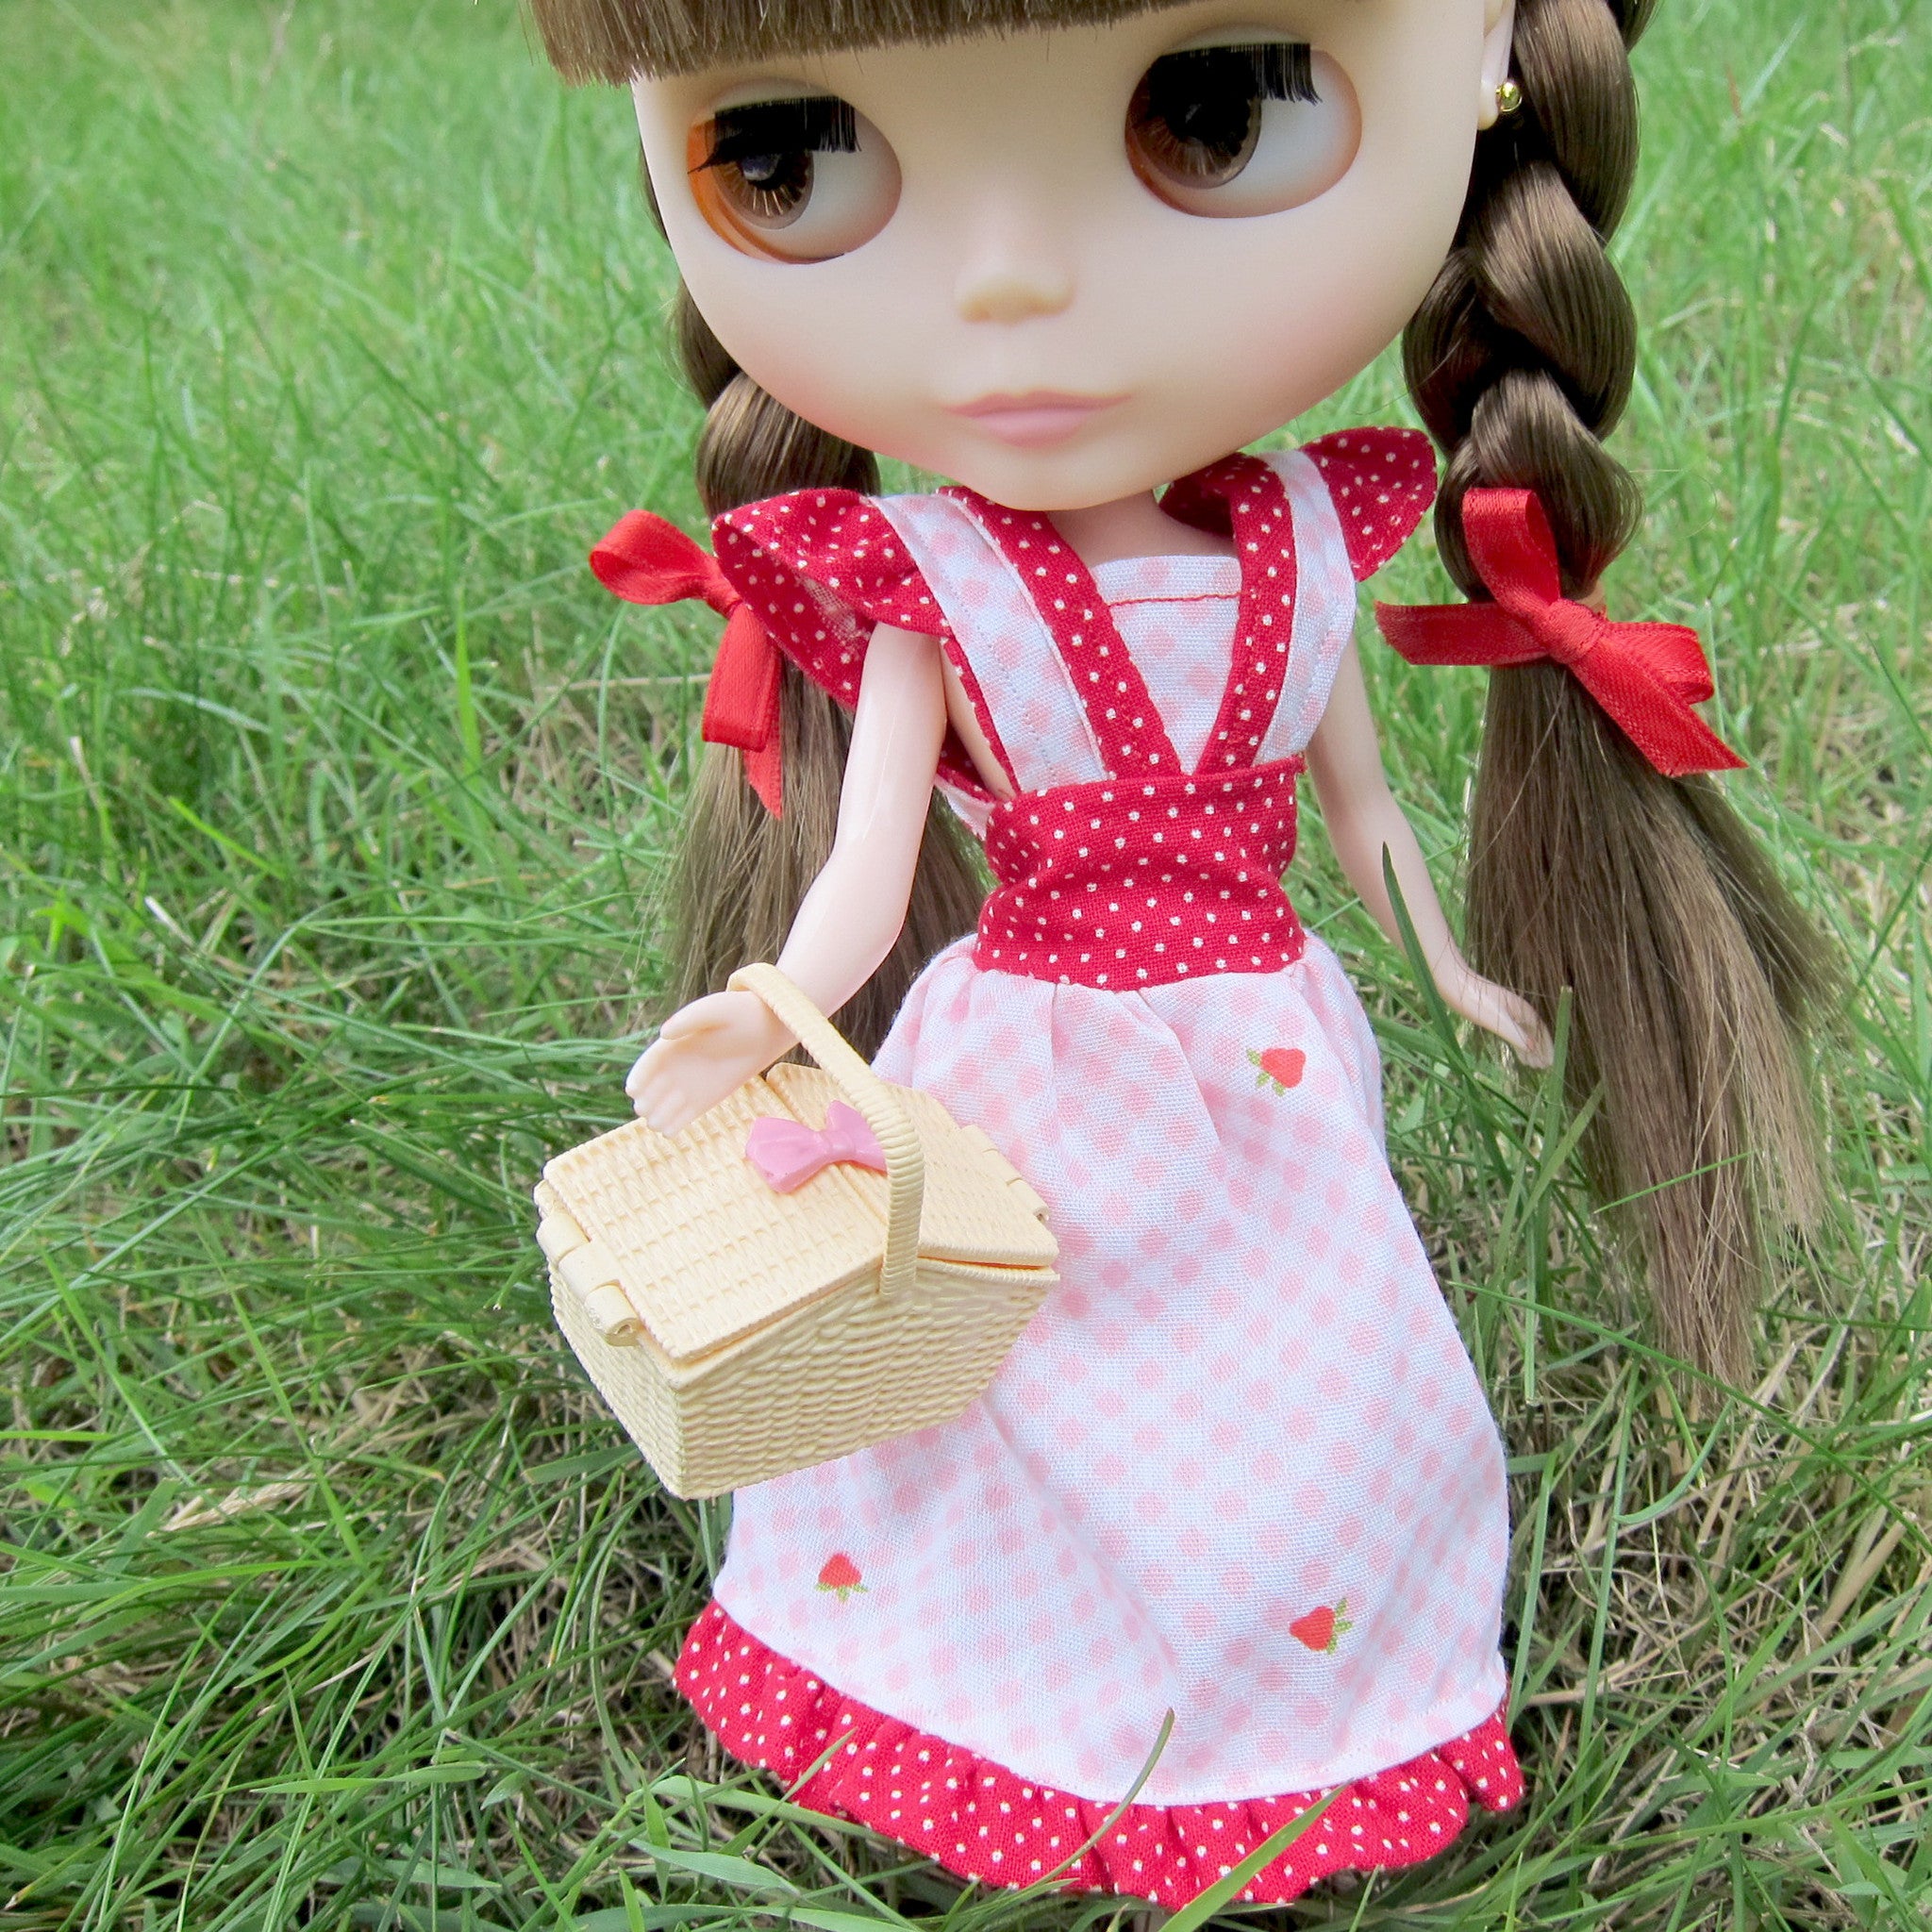 Handmade summer picnic dress for Blythe and Pullip dolls